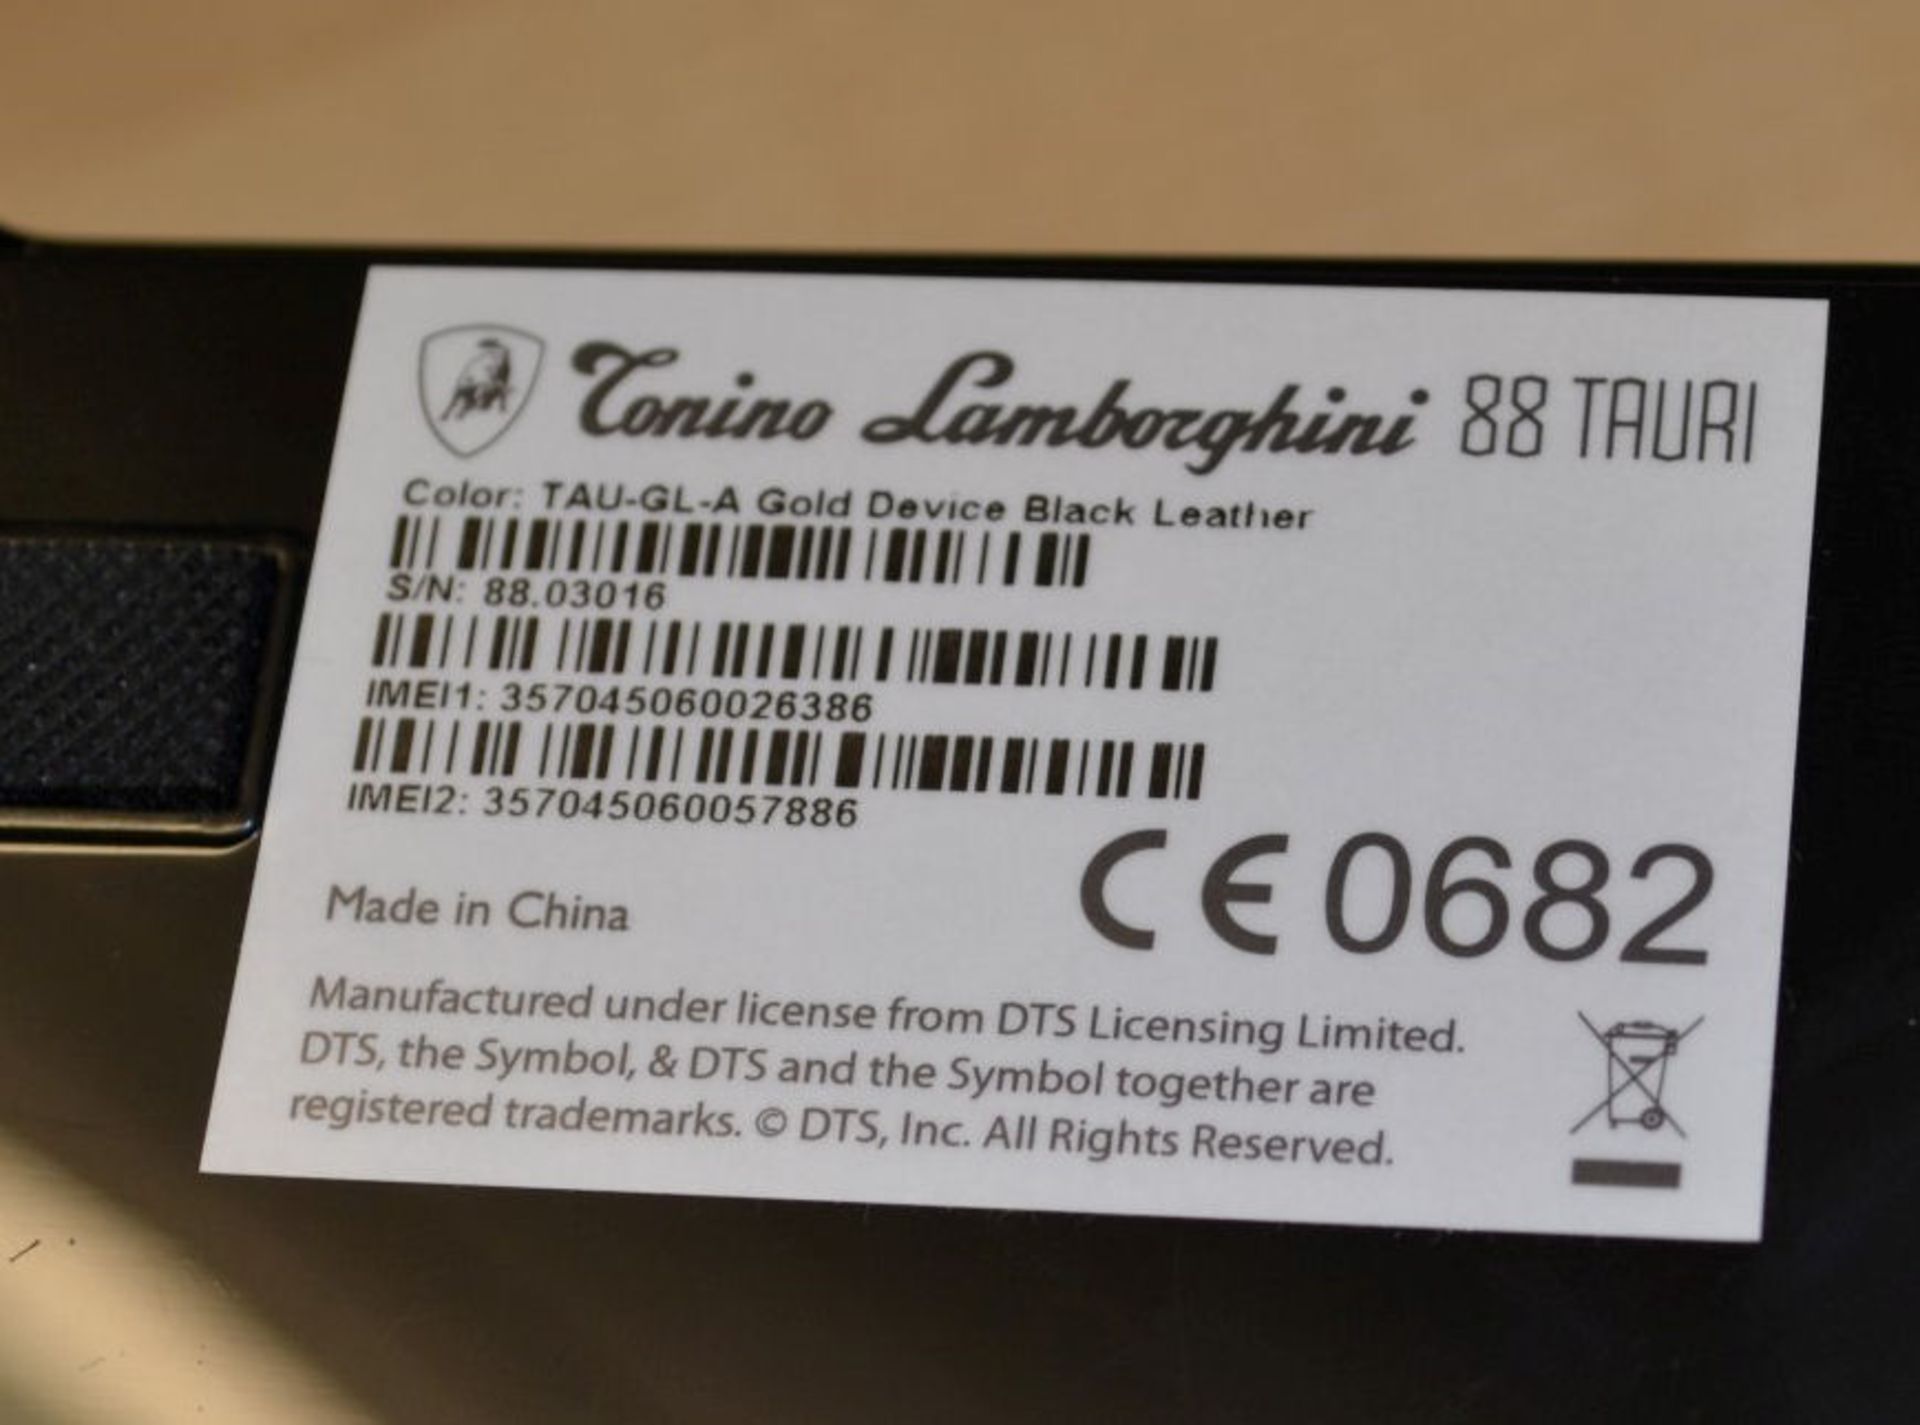 1 x Limited Edition Lamborghini "88 Tauri" Android Smart Phone - Orange - Original RRP £4500 - Image 10 of 27